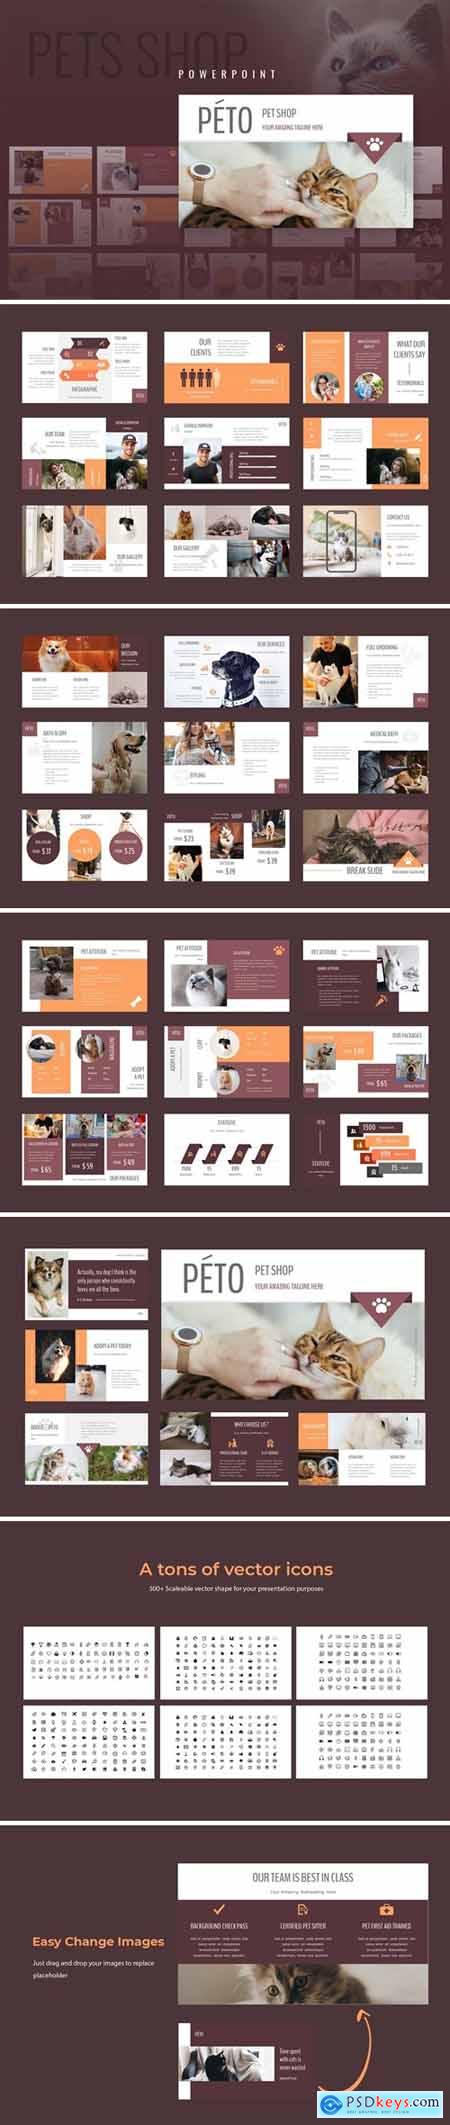 Peto - Pet Shop - Powerpoint, Keynote, Google Slides Templates